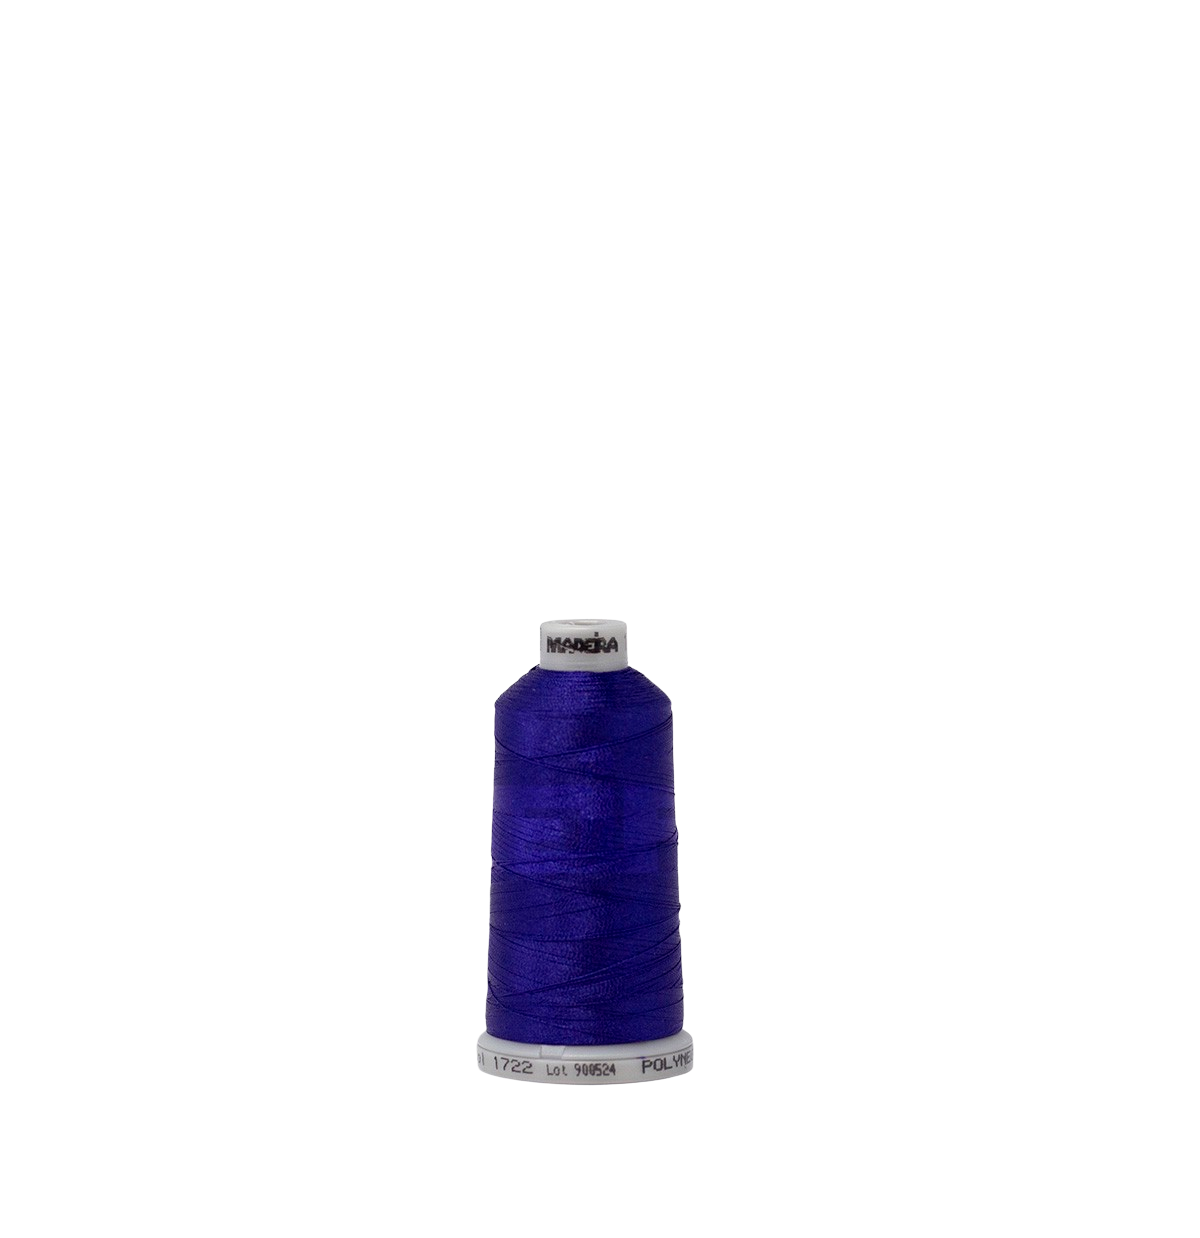 Royal Purple 1722 #40 Weight Madeira Polyneon Thread-2